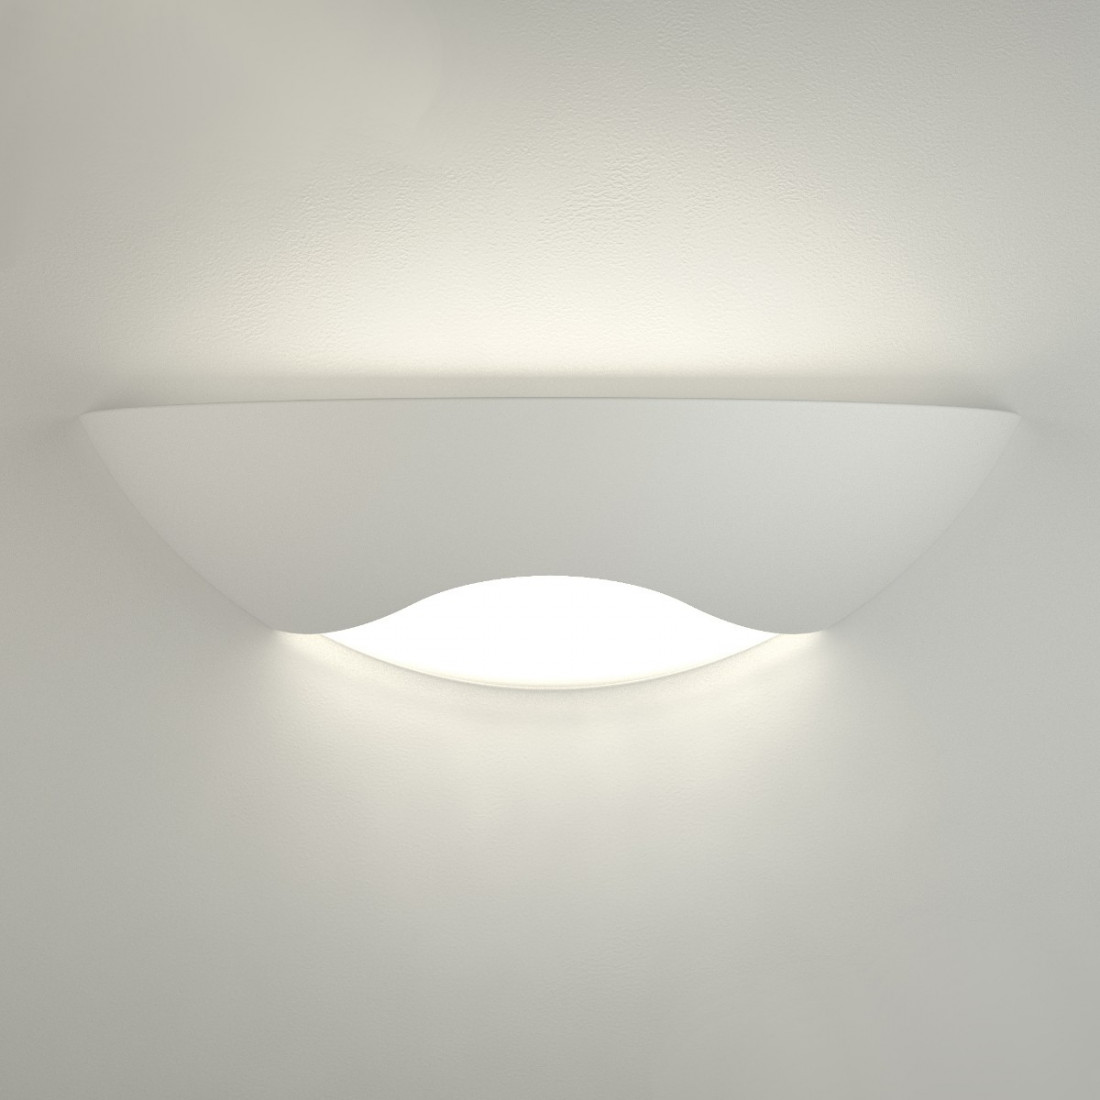 Applique BF-8259 3059 LED 15W gesso bianco verniciabile biemissione lampada parete vaschetta interno IP20